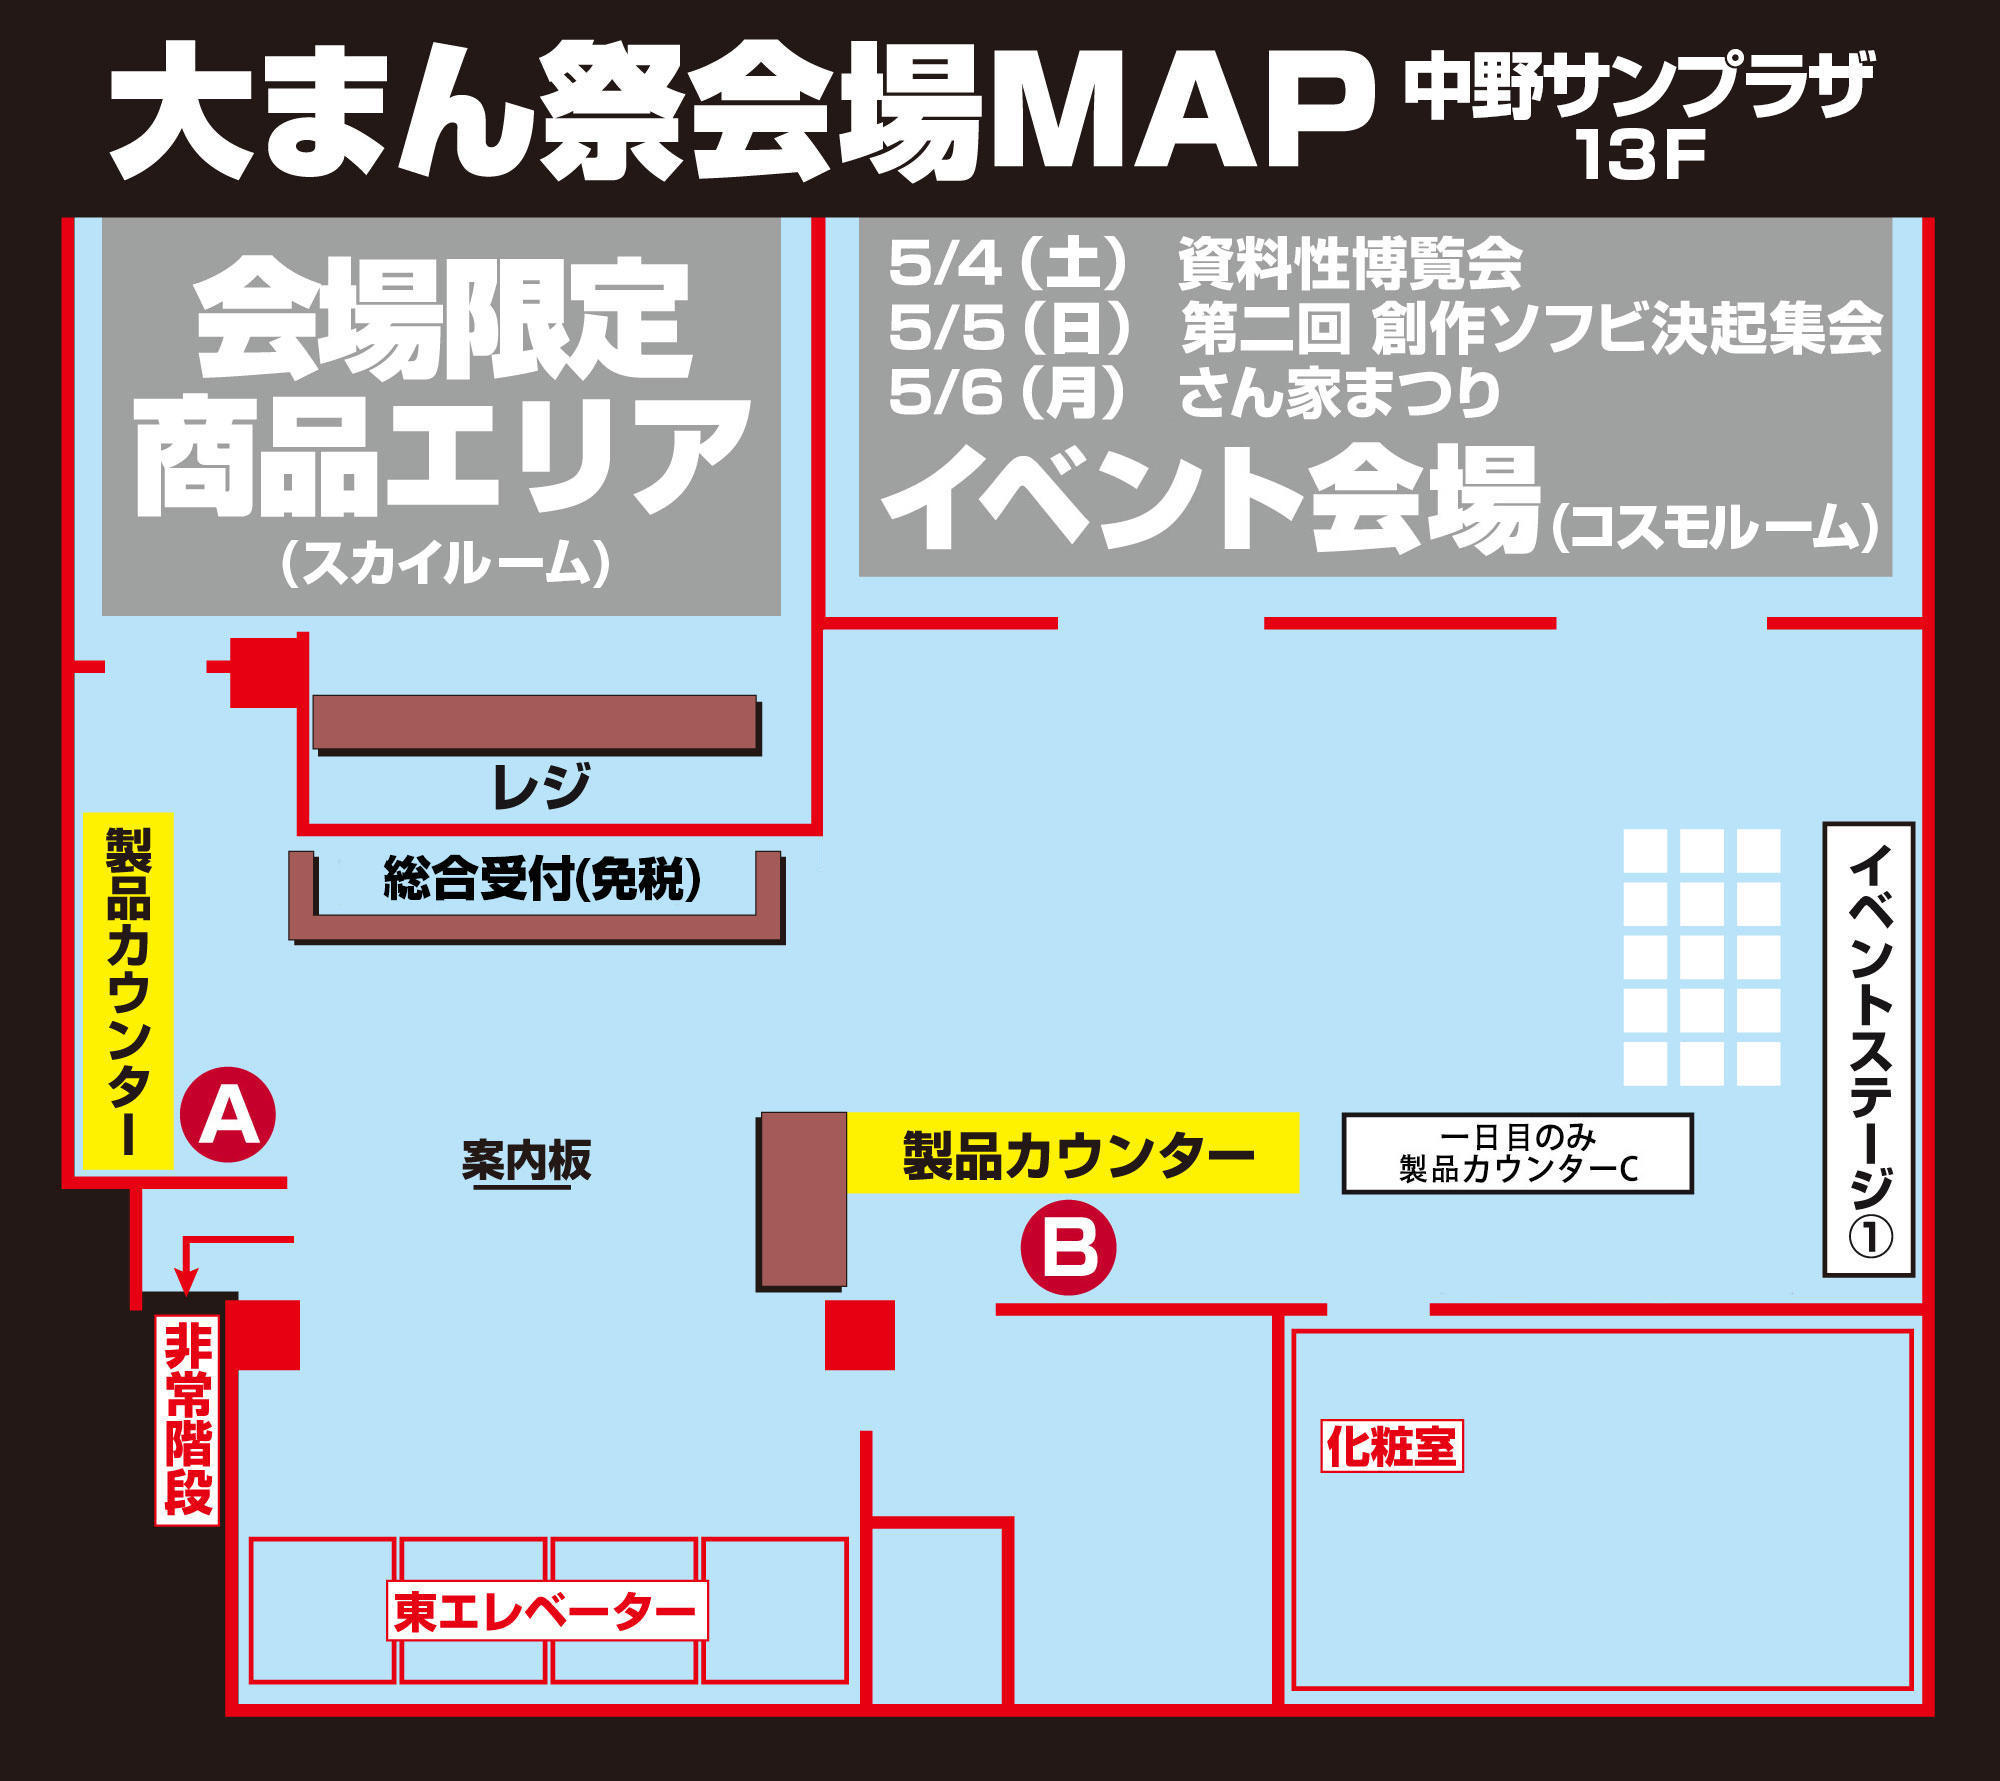 http://laza.mandarake.co.jp/BTP_plus/up/2019/04/27/kaijyo_map.jpg